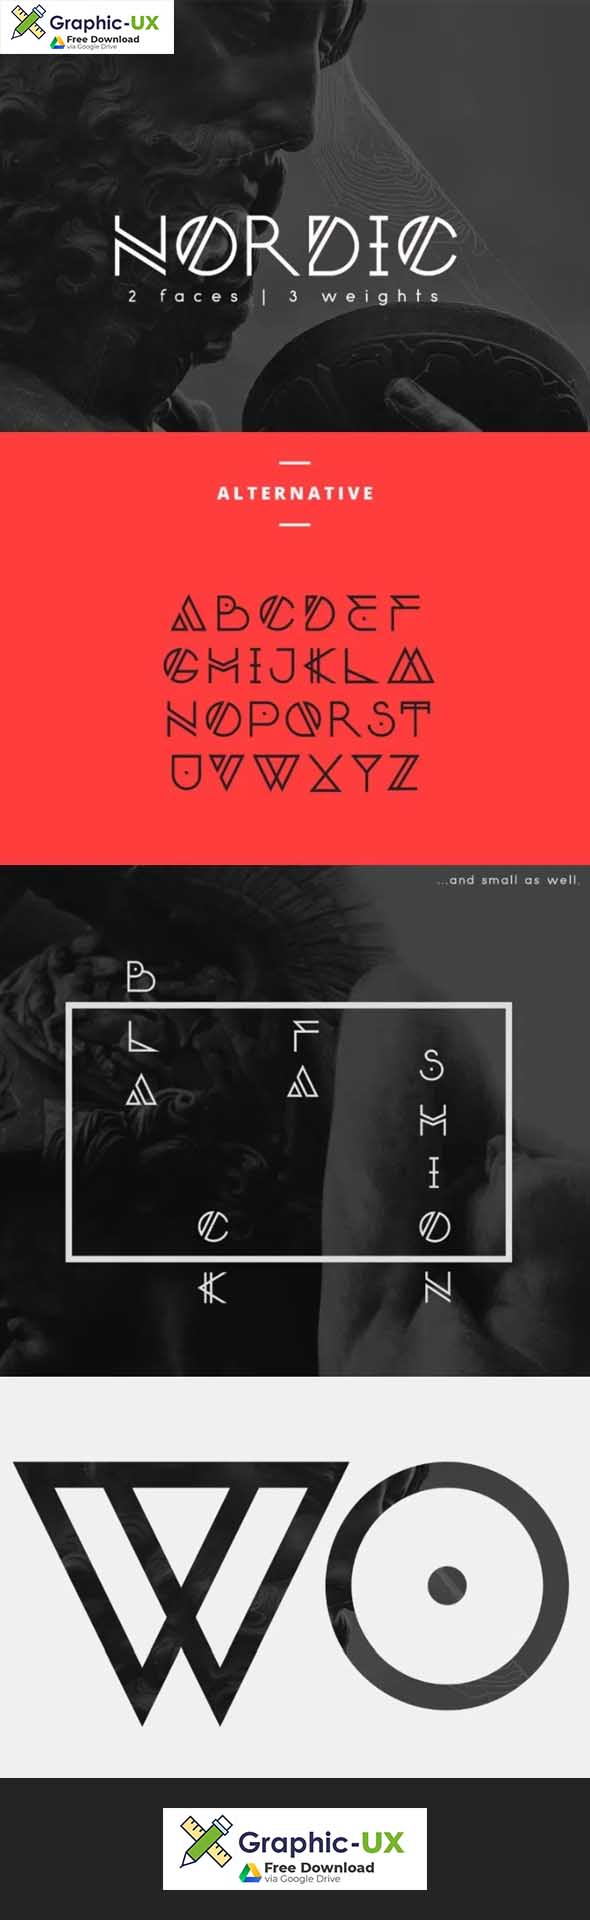 Nordic Free Font